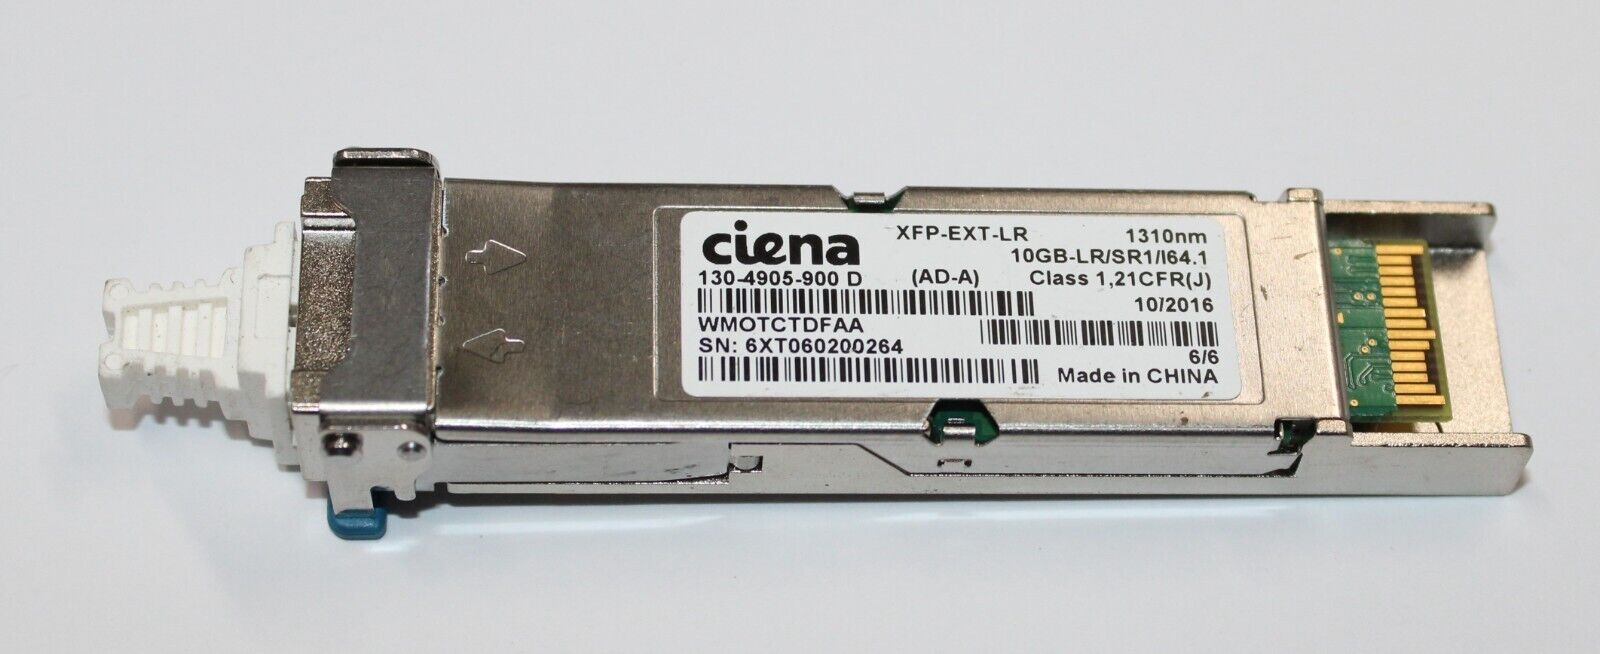 Ciena | XFP-EXT-LR | 130-4905-900 D | 10GB-LR/SR1/I64.1 Transceiver Module